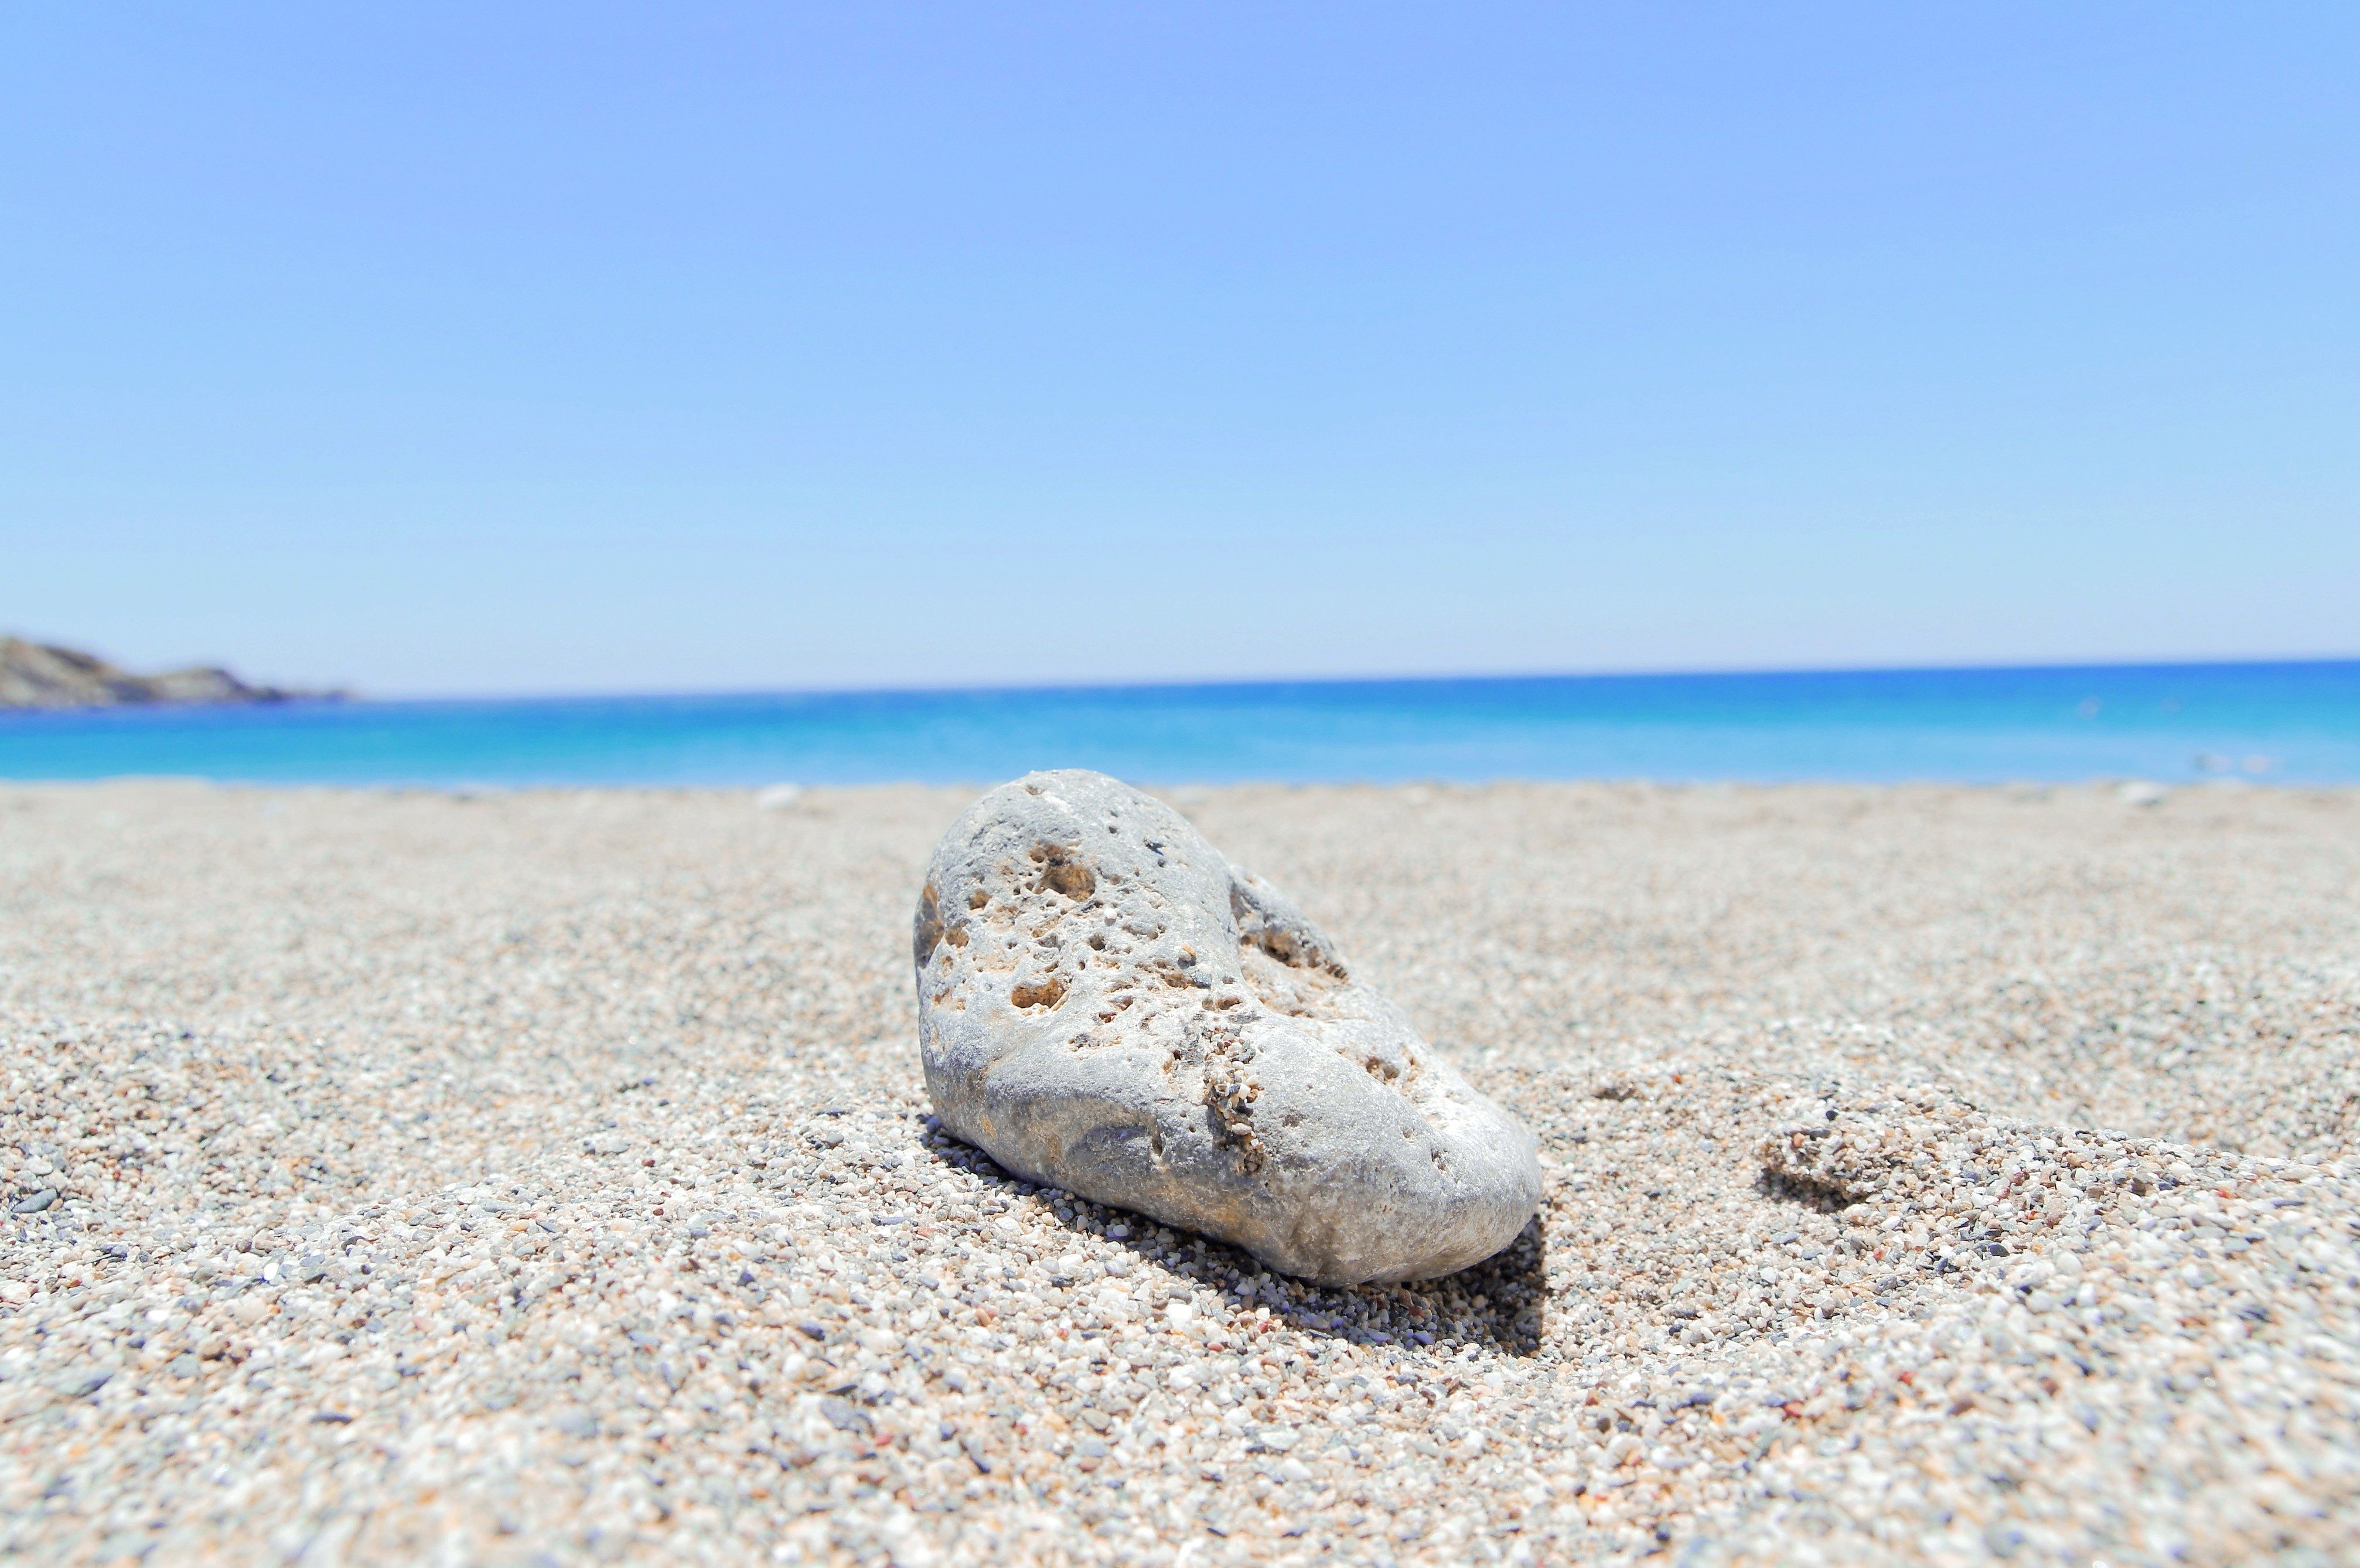 Free picture: stone, beach, sand, blue sky, rock, summert time, ocean